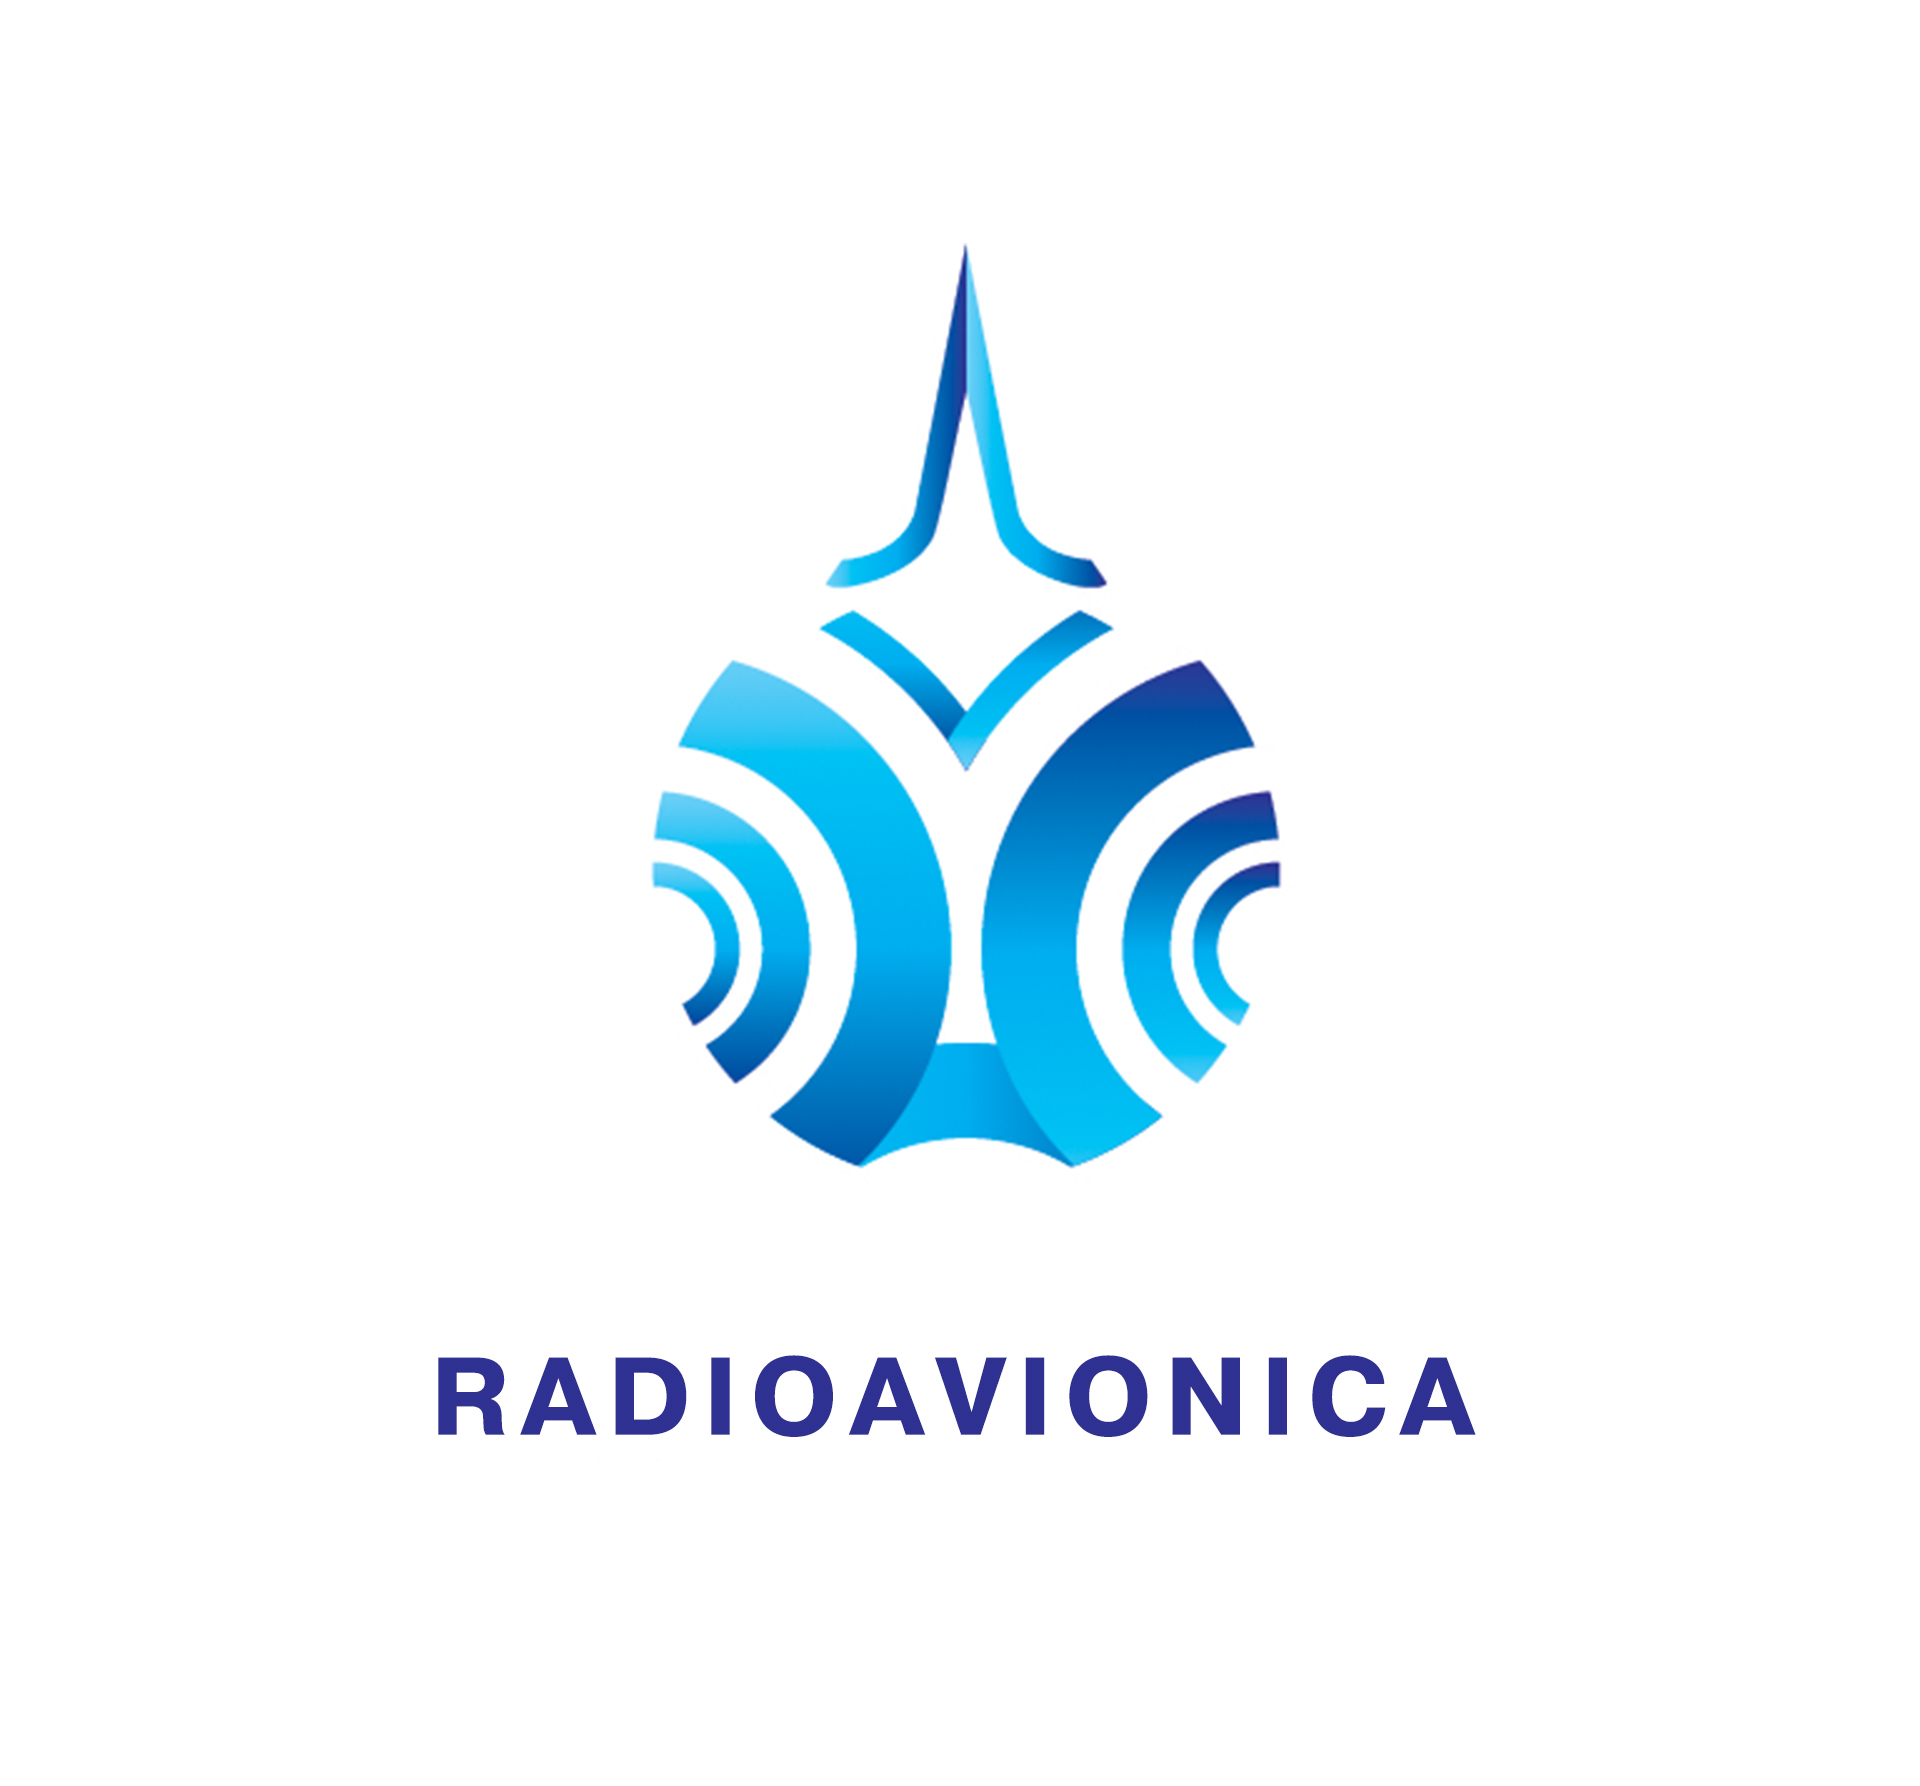 JSC Radioavioniсa